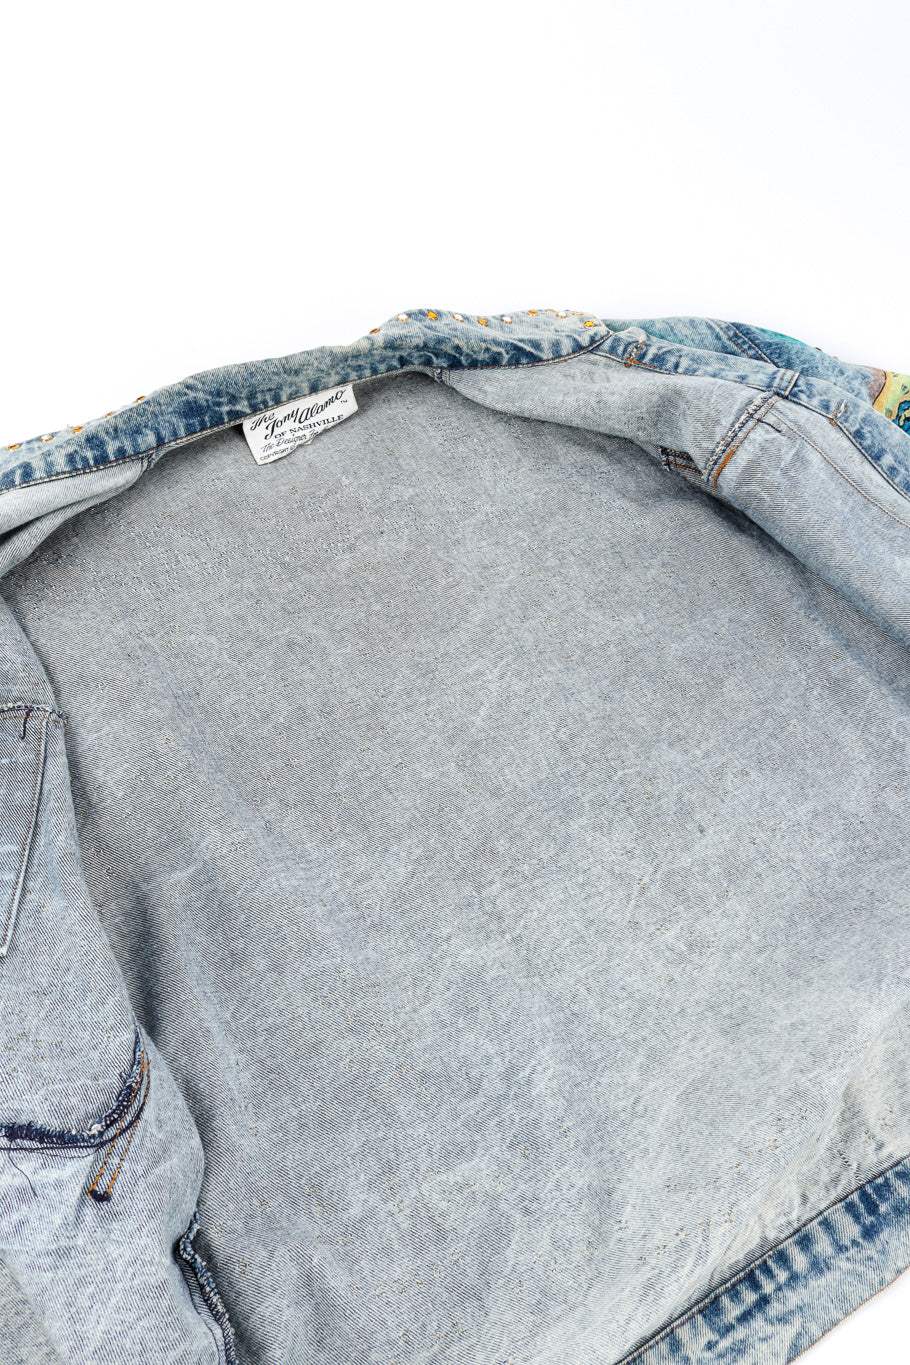 Vintage Tony Alamo Florida Denim Jacket open front view of inner fabric @Recessla